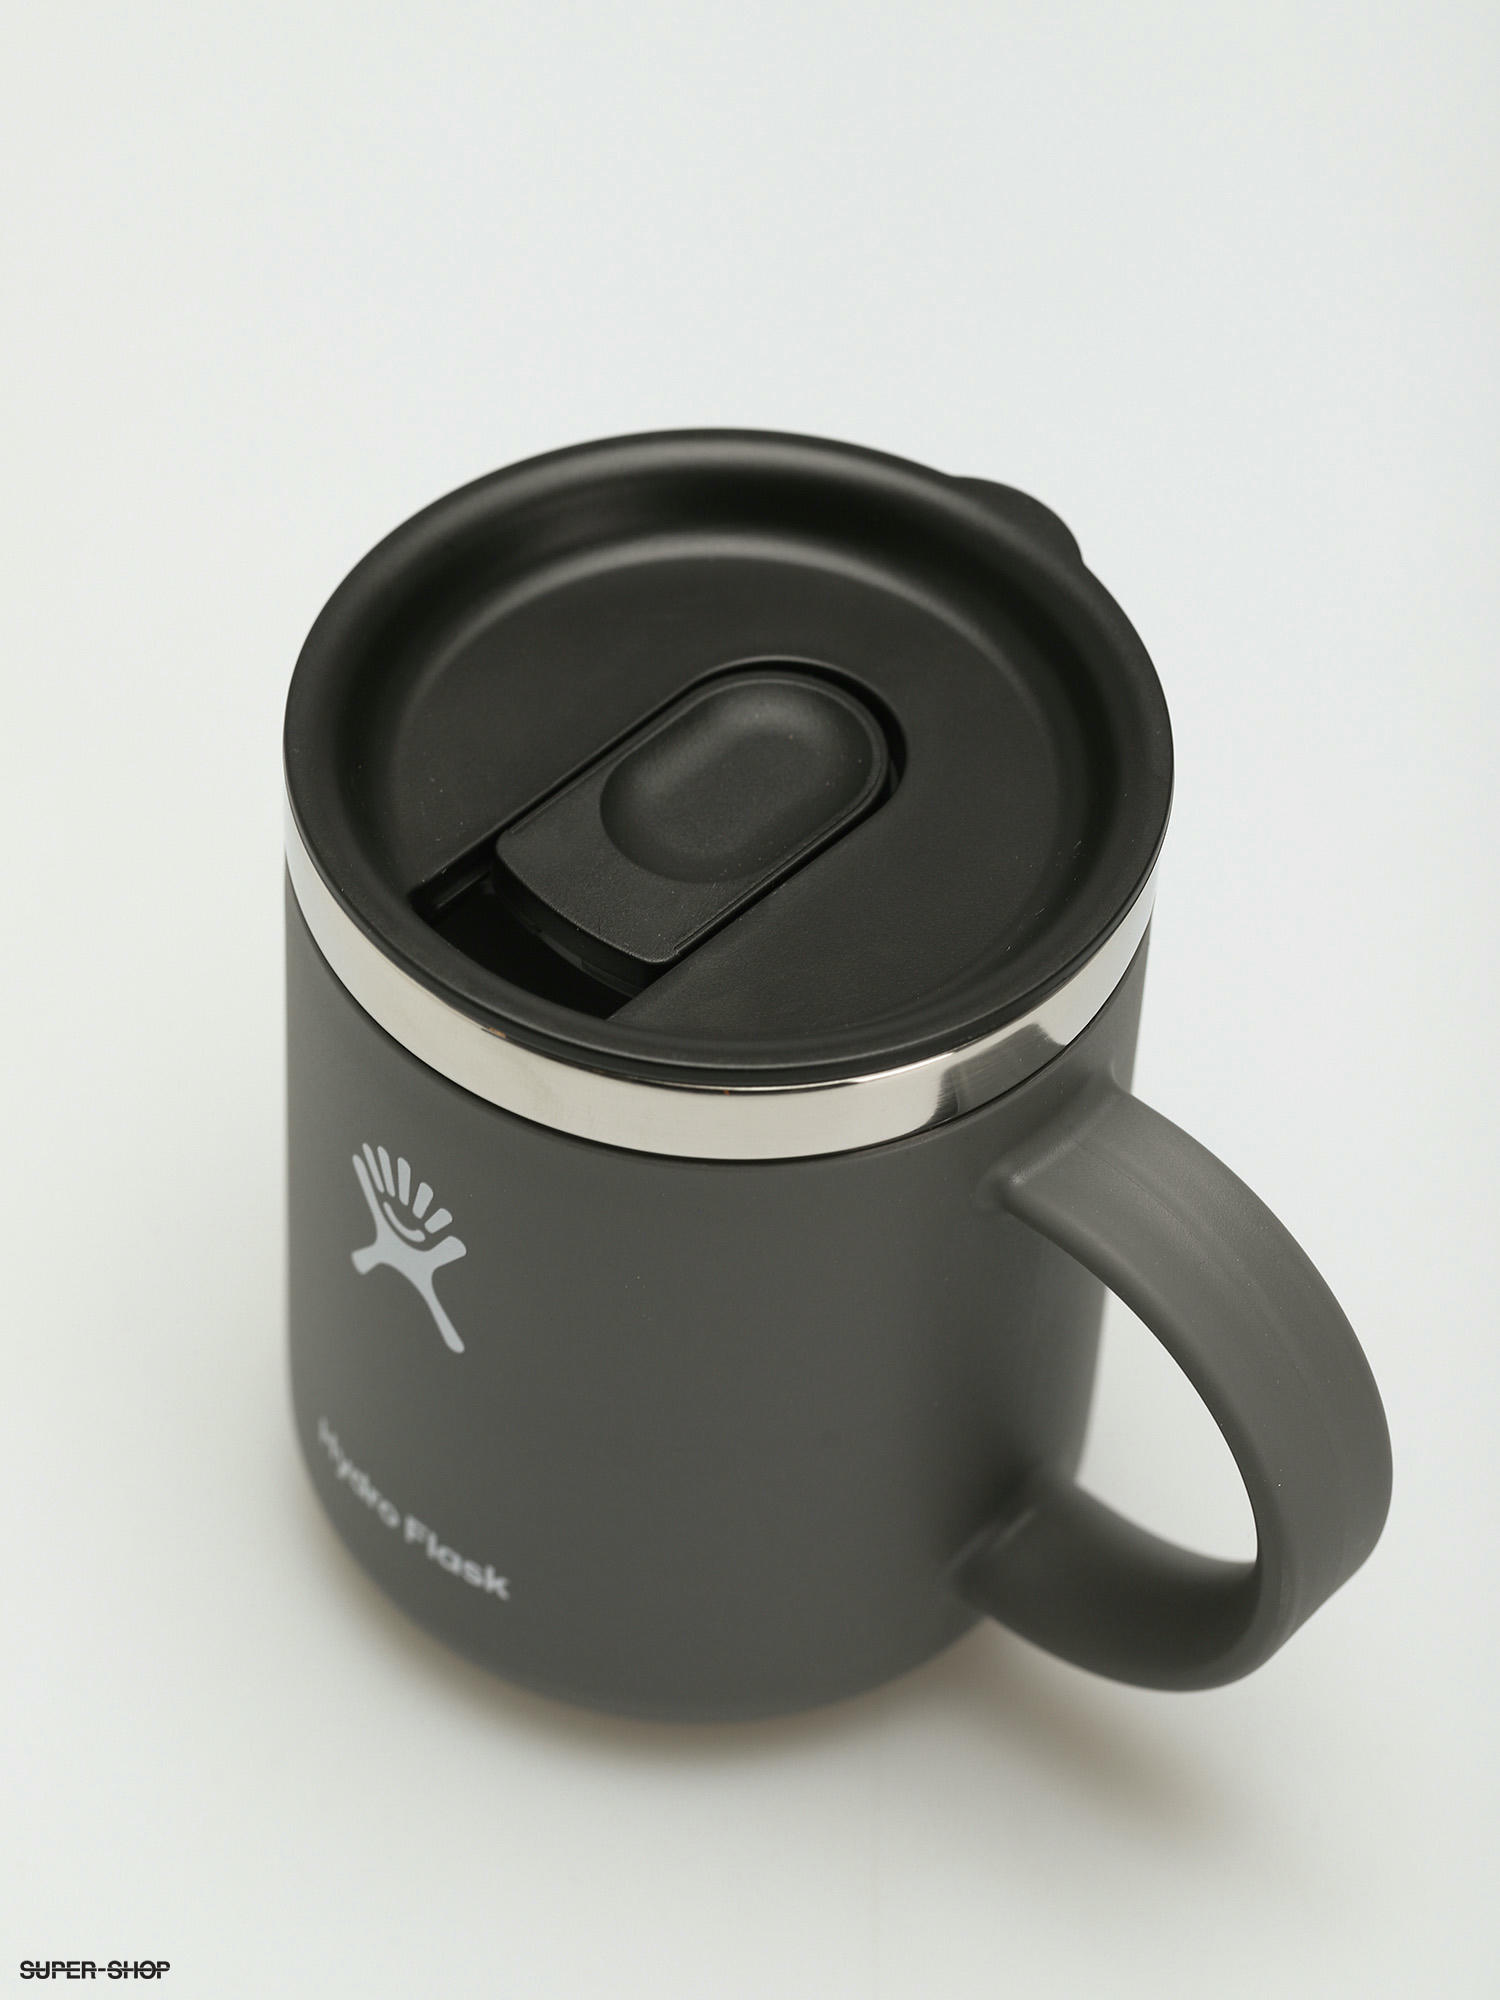 Hydro Flask 12 oz Coffee Mug Stone